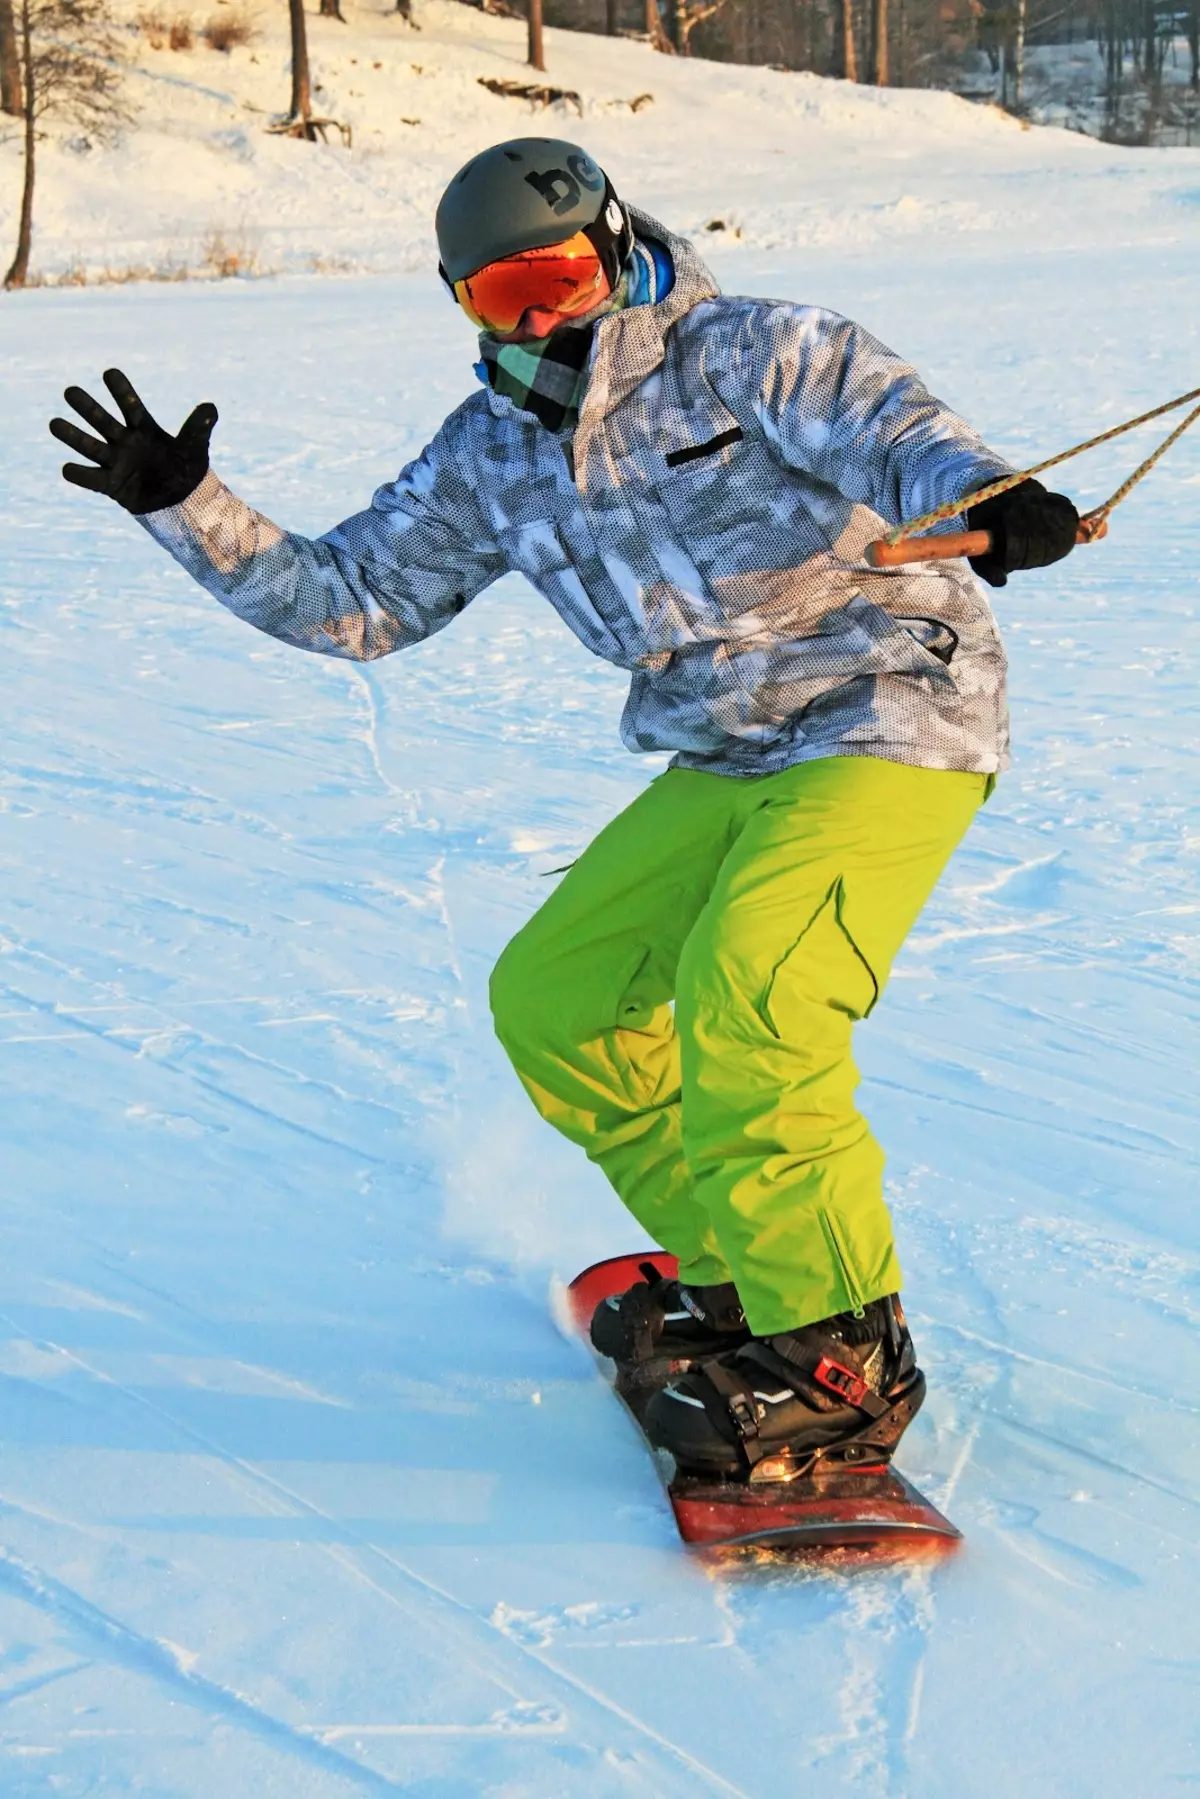 Botas de Snowboard (119 fotos): Como escolher botas de snowboard para mulheres, modelo Nike, Adidas e outras marcas populares 15127_3